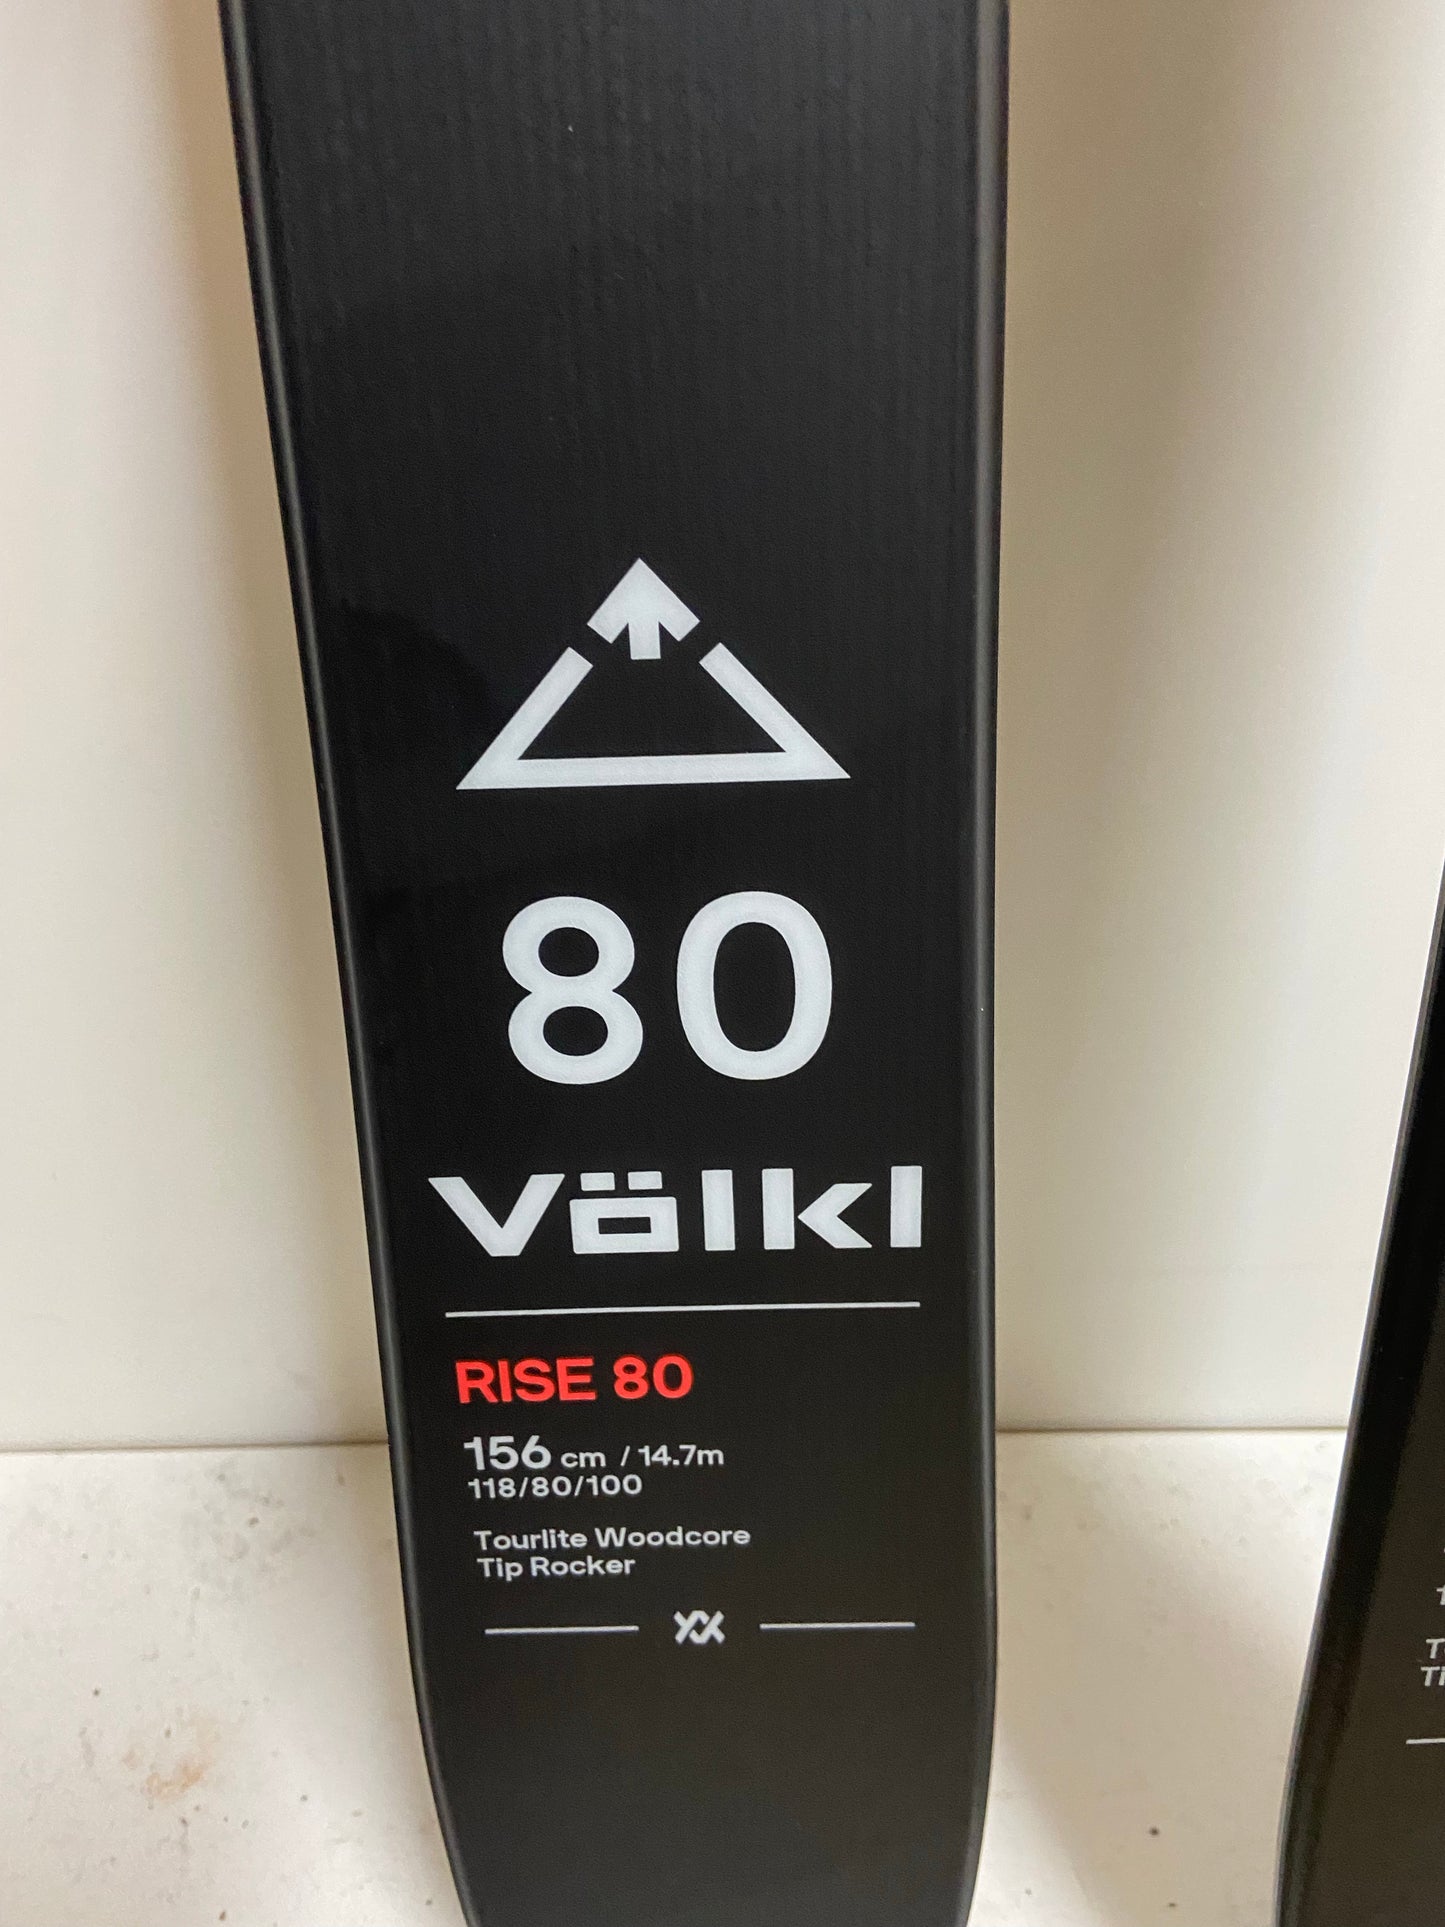 VERHUUR - Volkl Rise 80 (156cm) + Marker Alpinist 8 + Contour Hybrid vellen